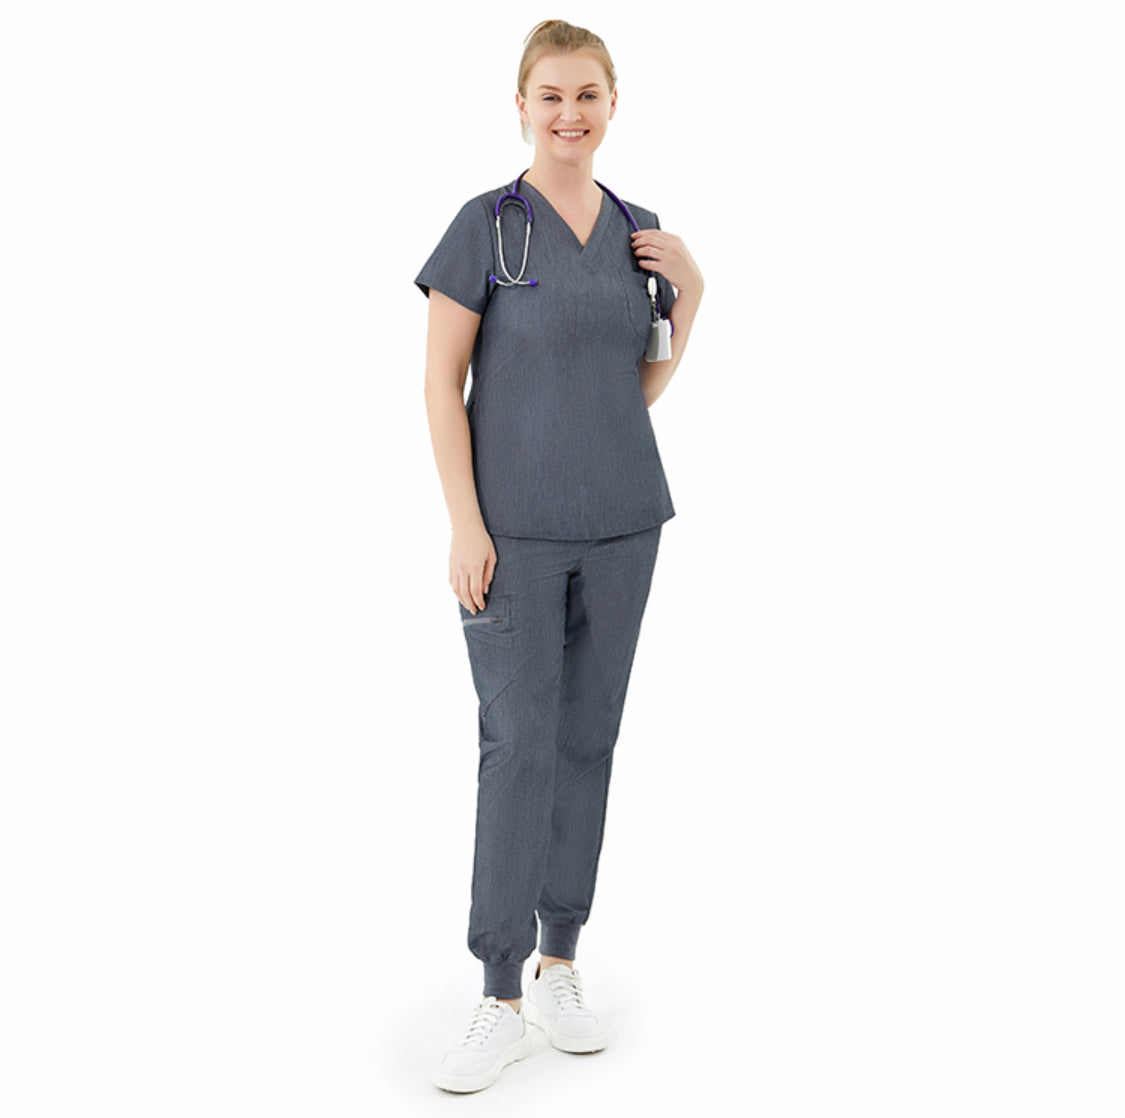 Melange Grey Medical Scrubs Uniforms